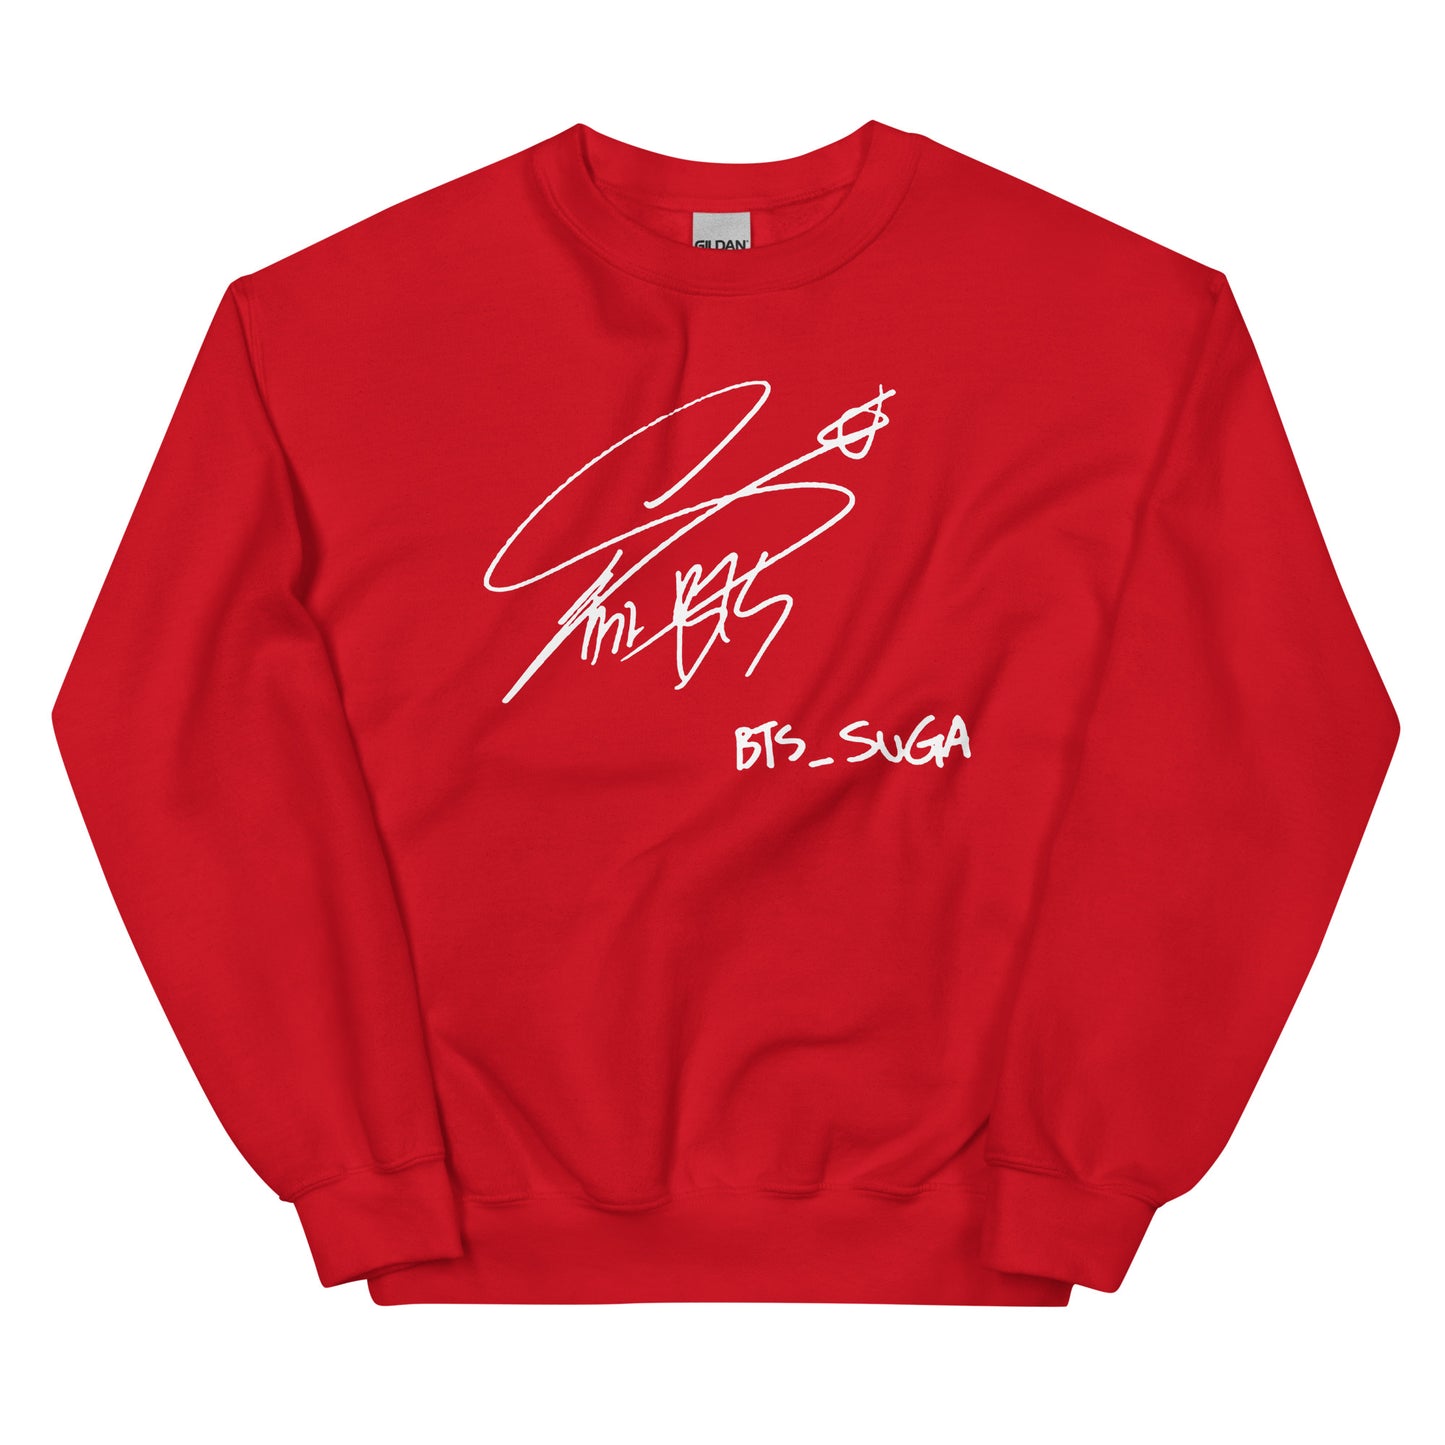 BTS Suga, Min Yoon-gi Autograph Unisex Sweatshirt